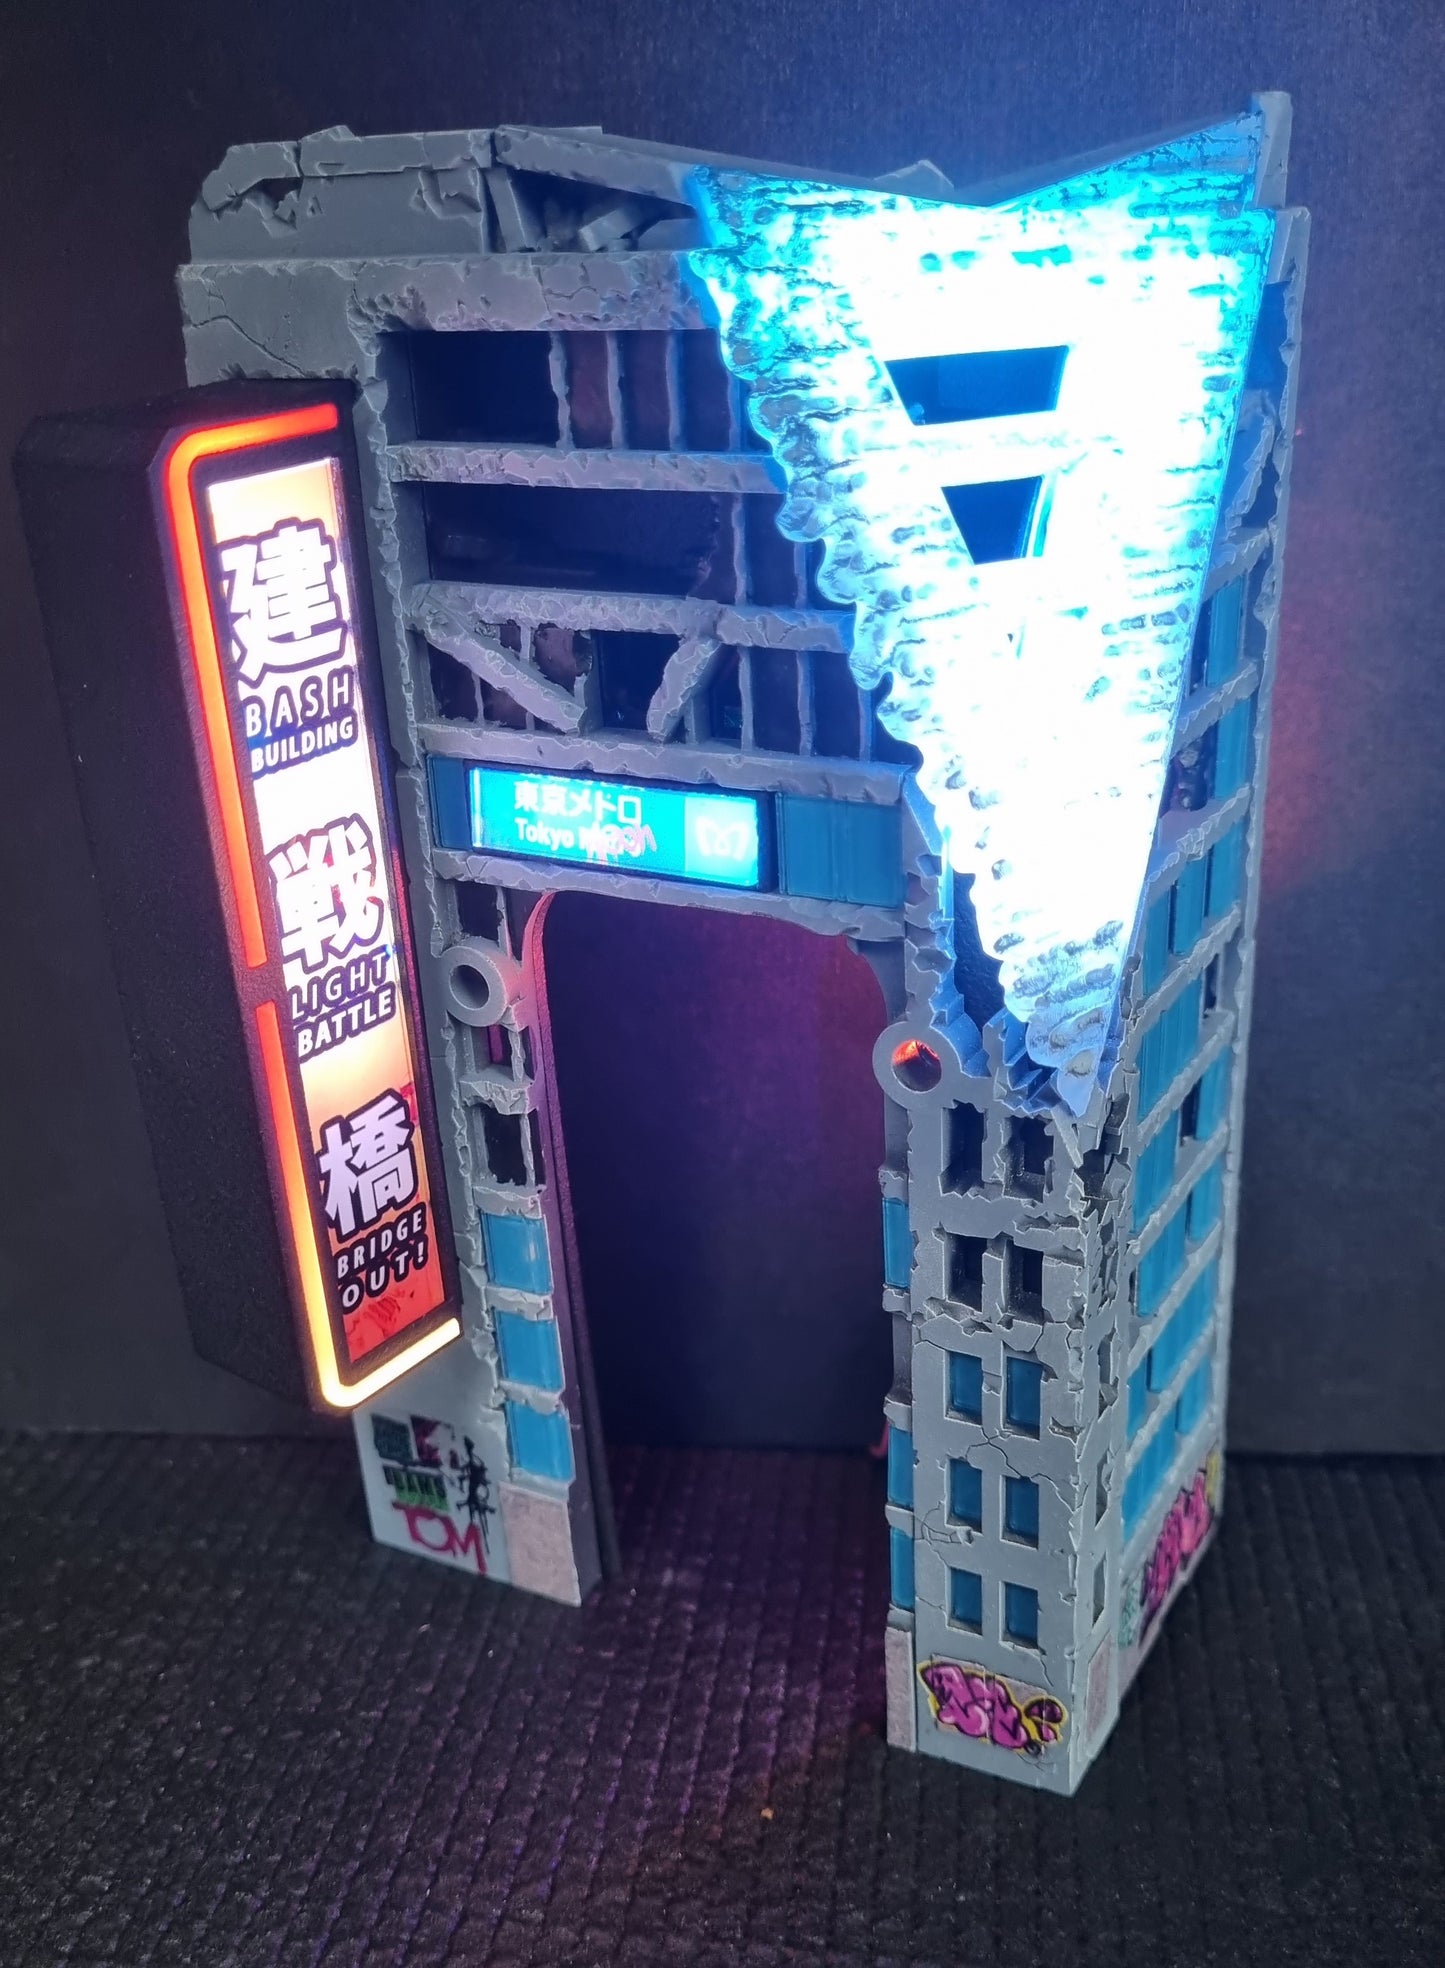 Godzilla "Subway" building mod (Tokyo Neon #3)